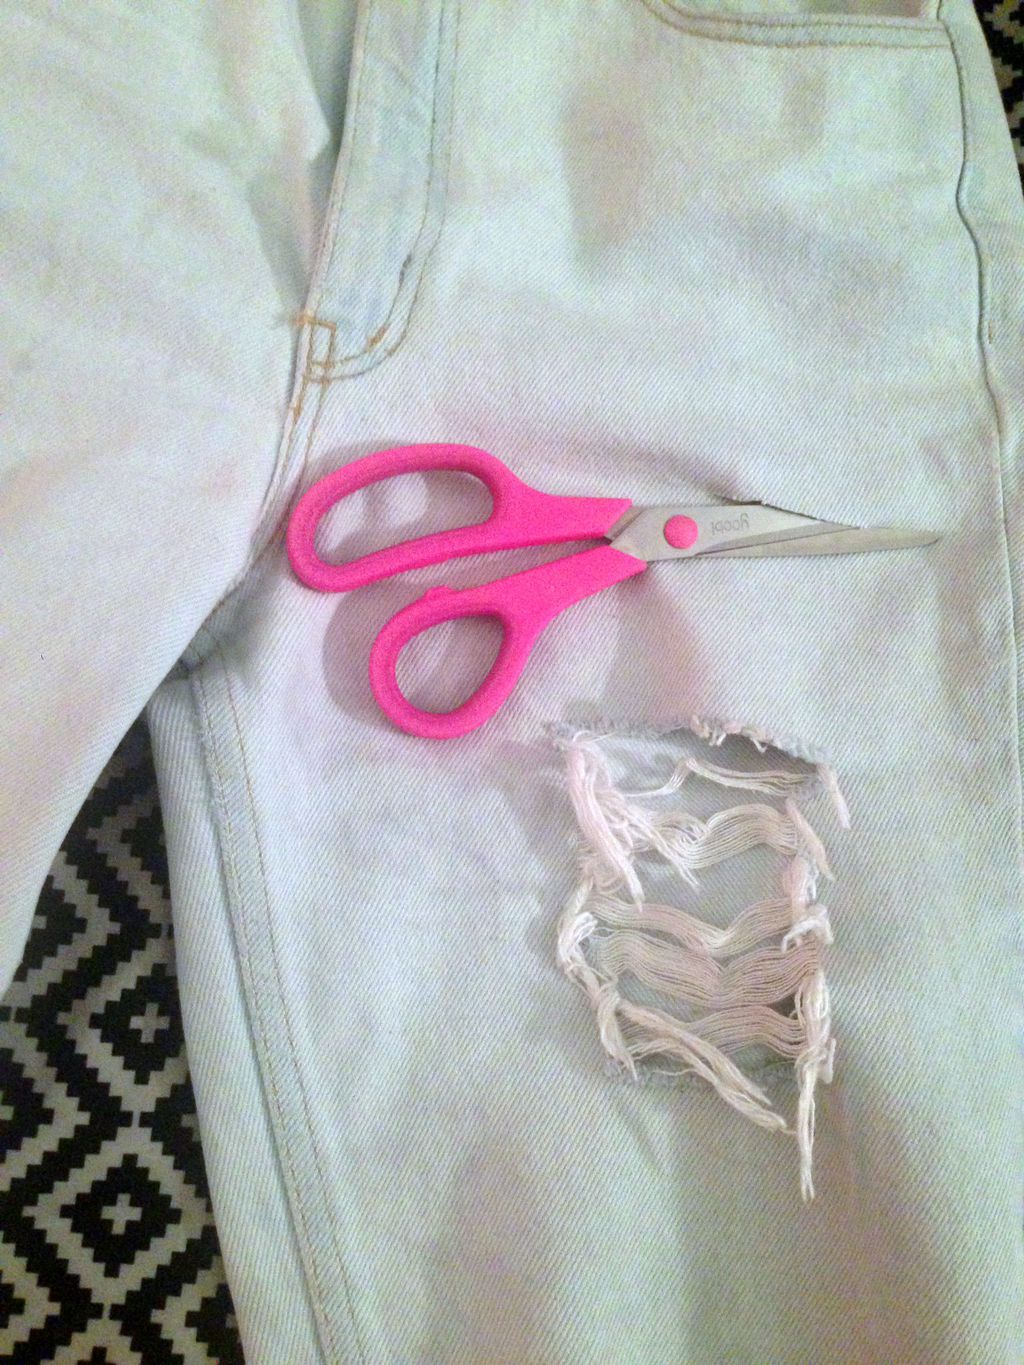 DIY distressed jeans scissors